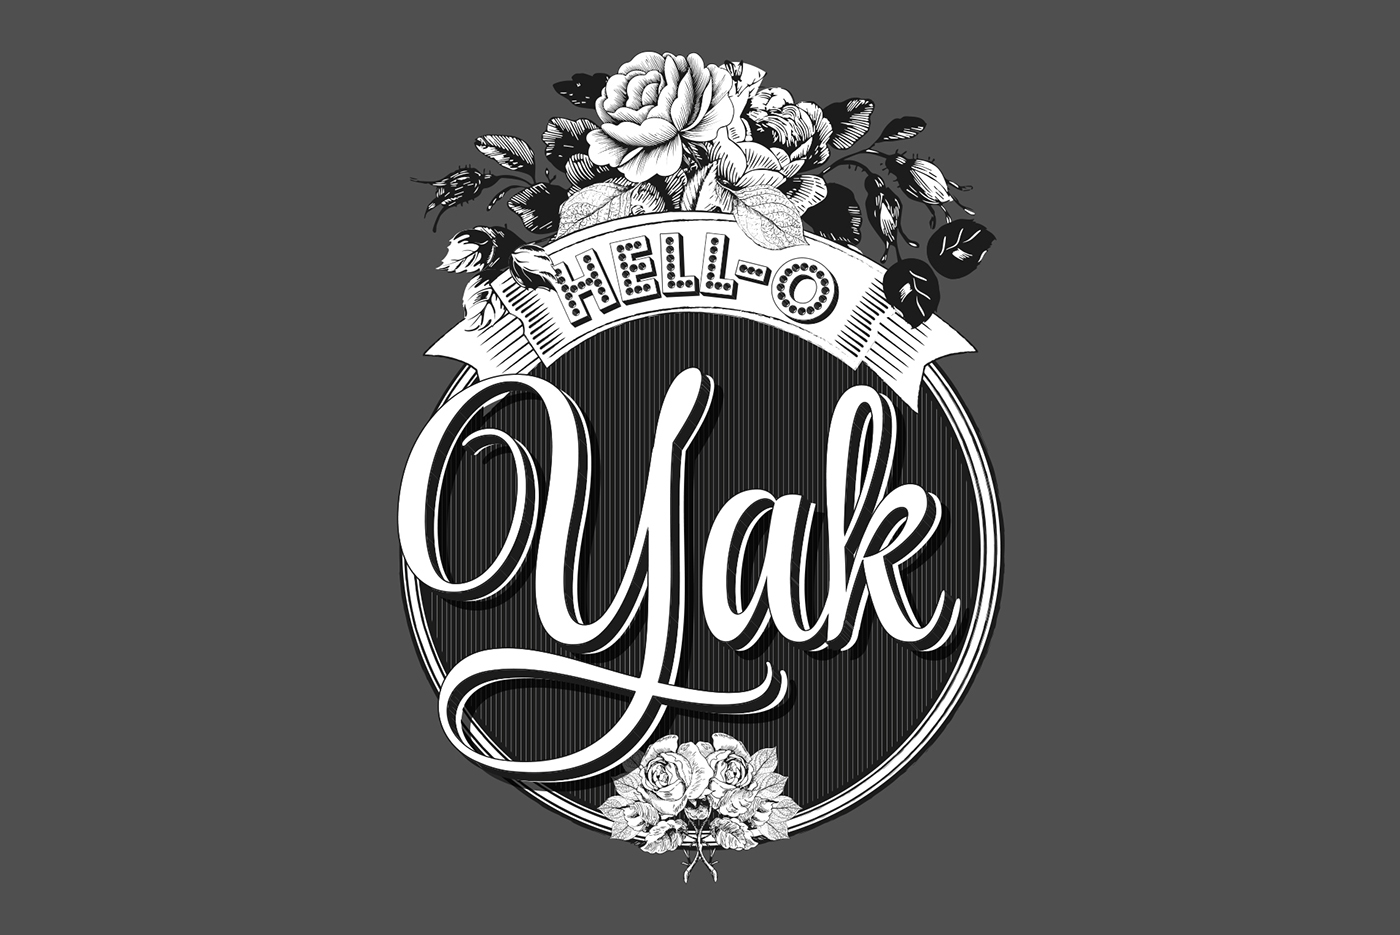 Hell-o Yak lina posada Type Sailor Debut Album type design engraved el camino